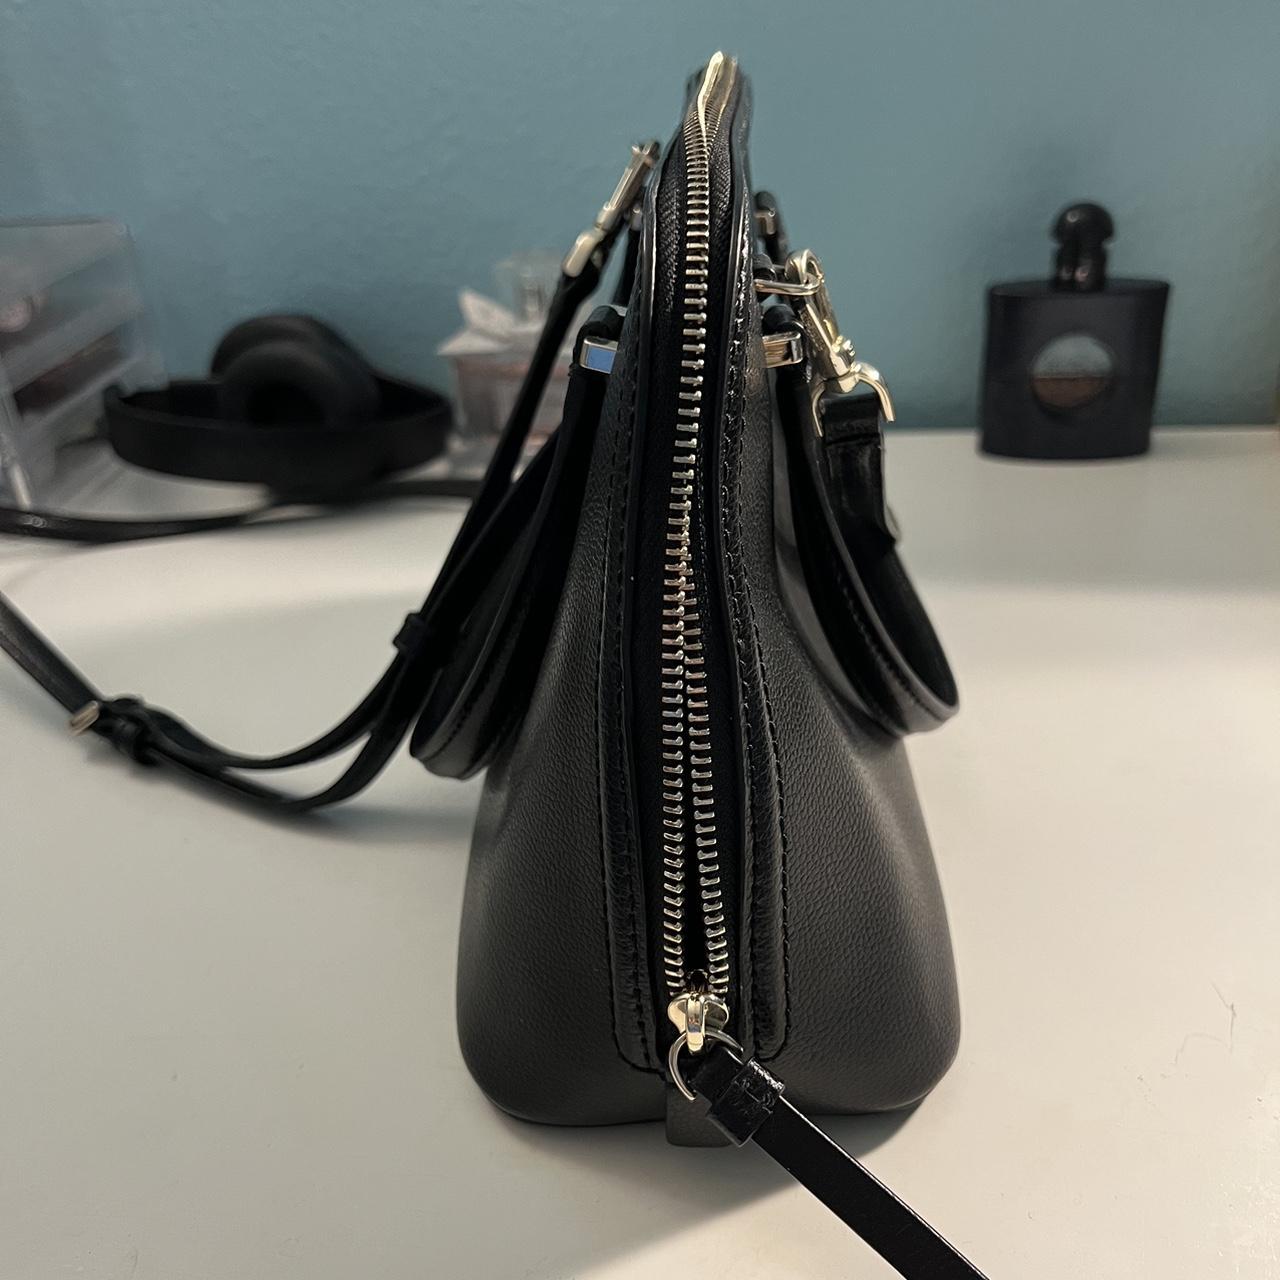 Kate spade crossbody purse ✨, Can be worn as a